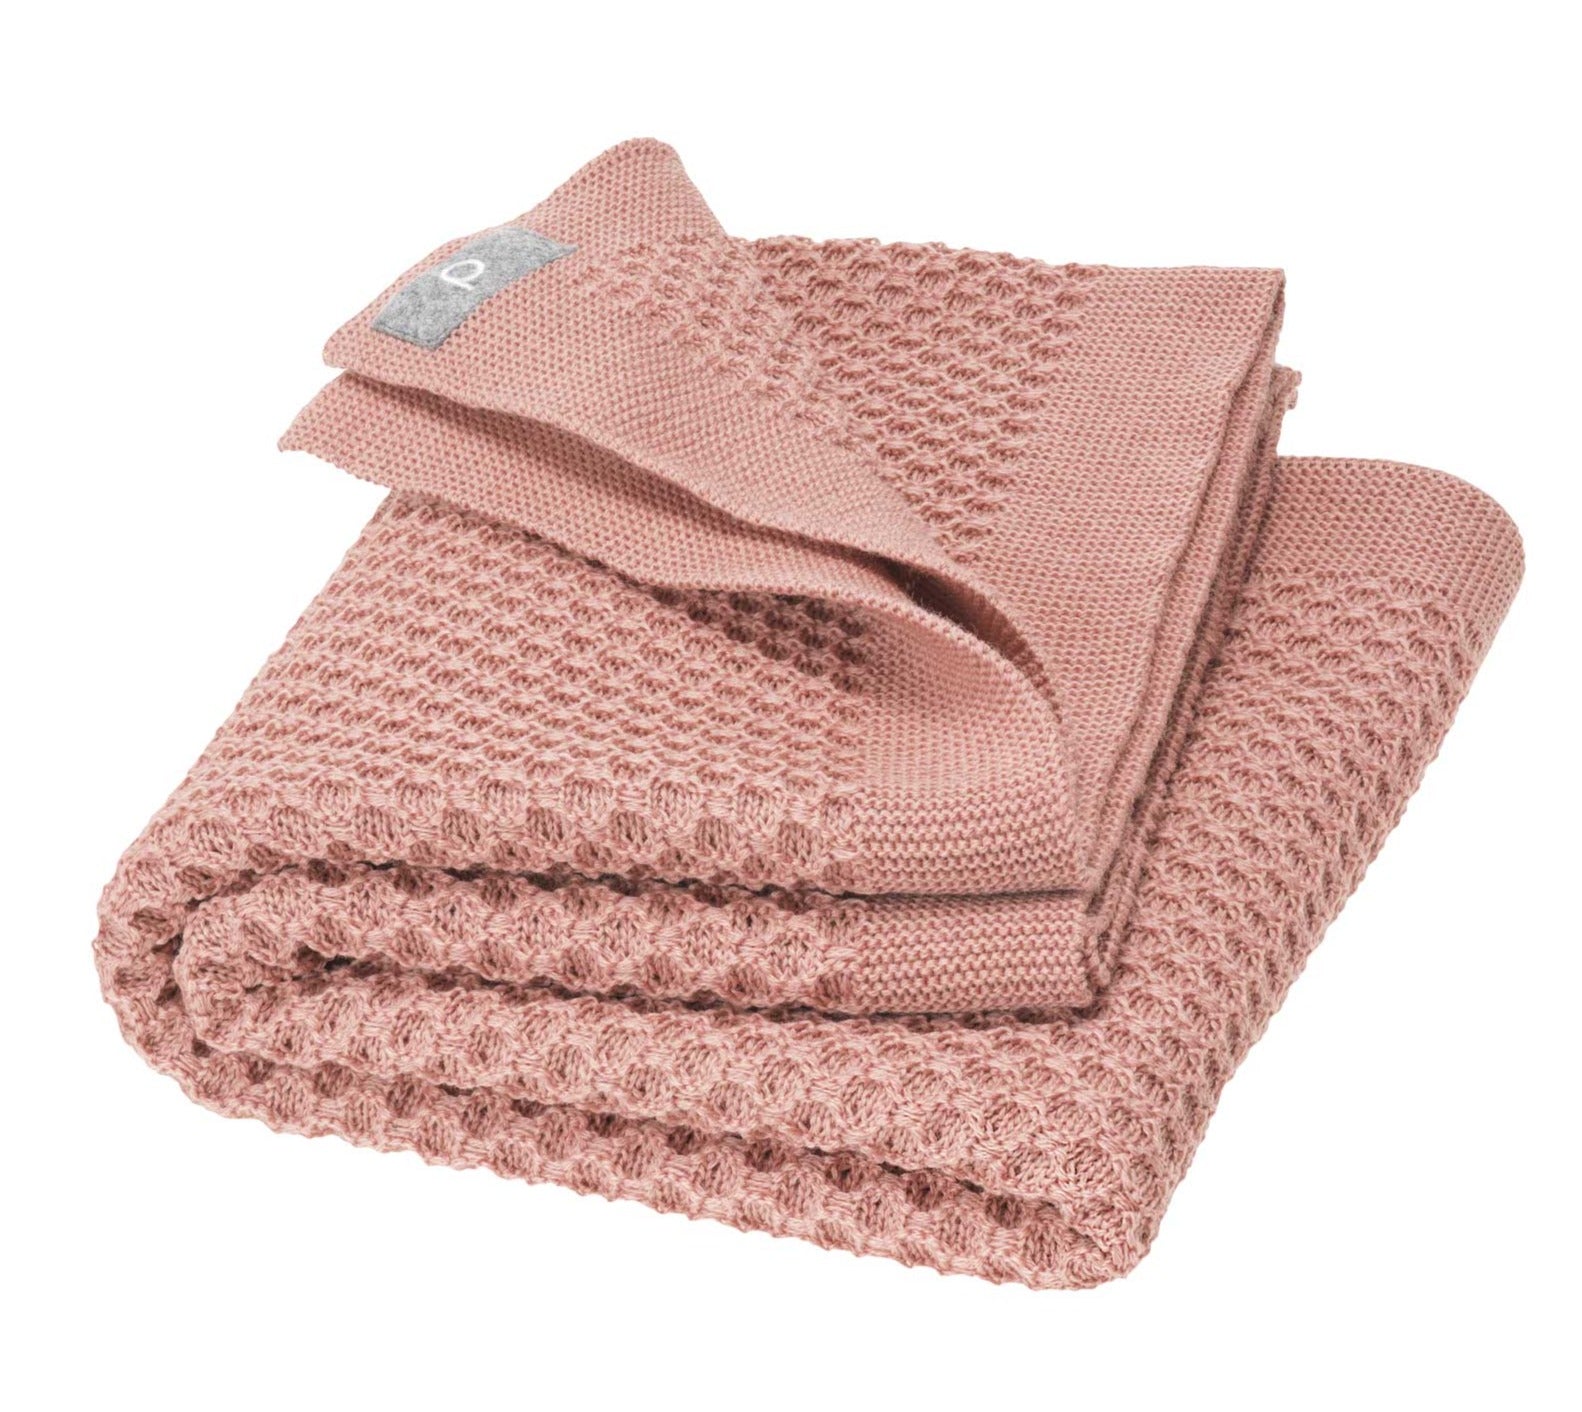 Disana's honeycomb blanket in rose. Made of 100% soft merino wool.